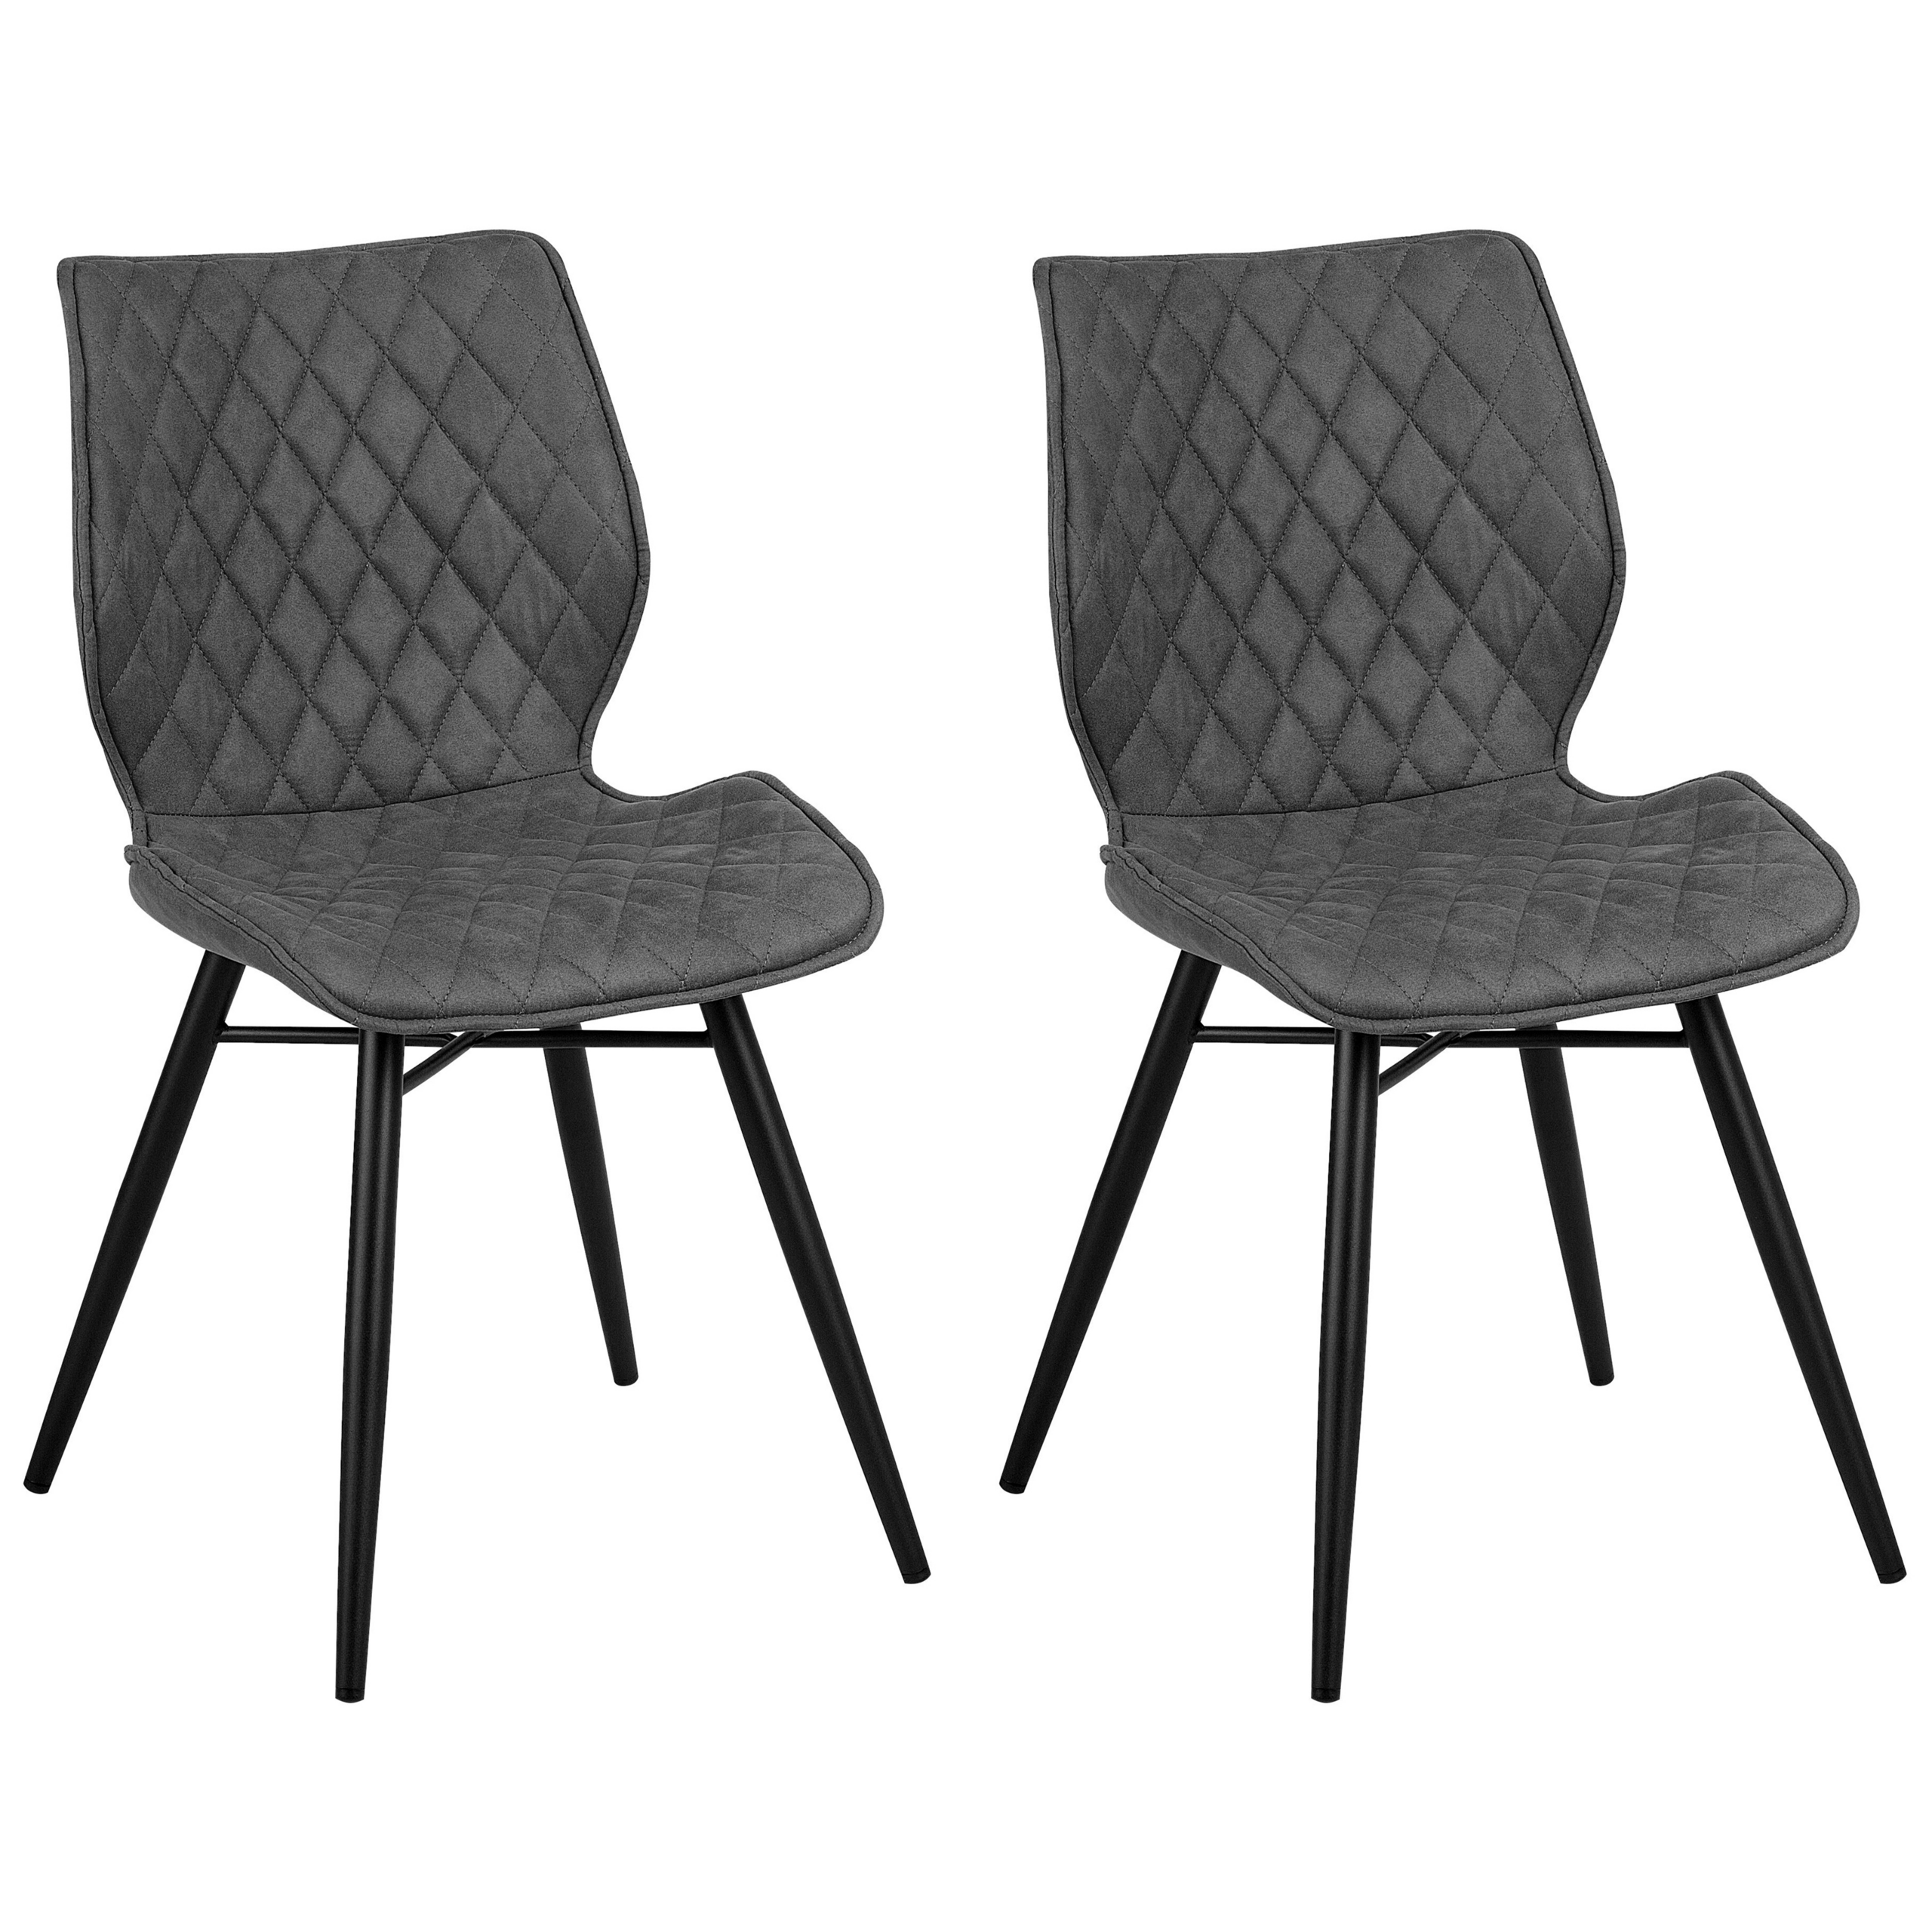 Beliani Set of 2 Dining Chairs Grey Fabric Upholstery Black Legs Rustic Retro Style